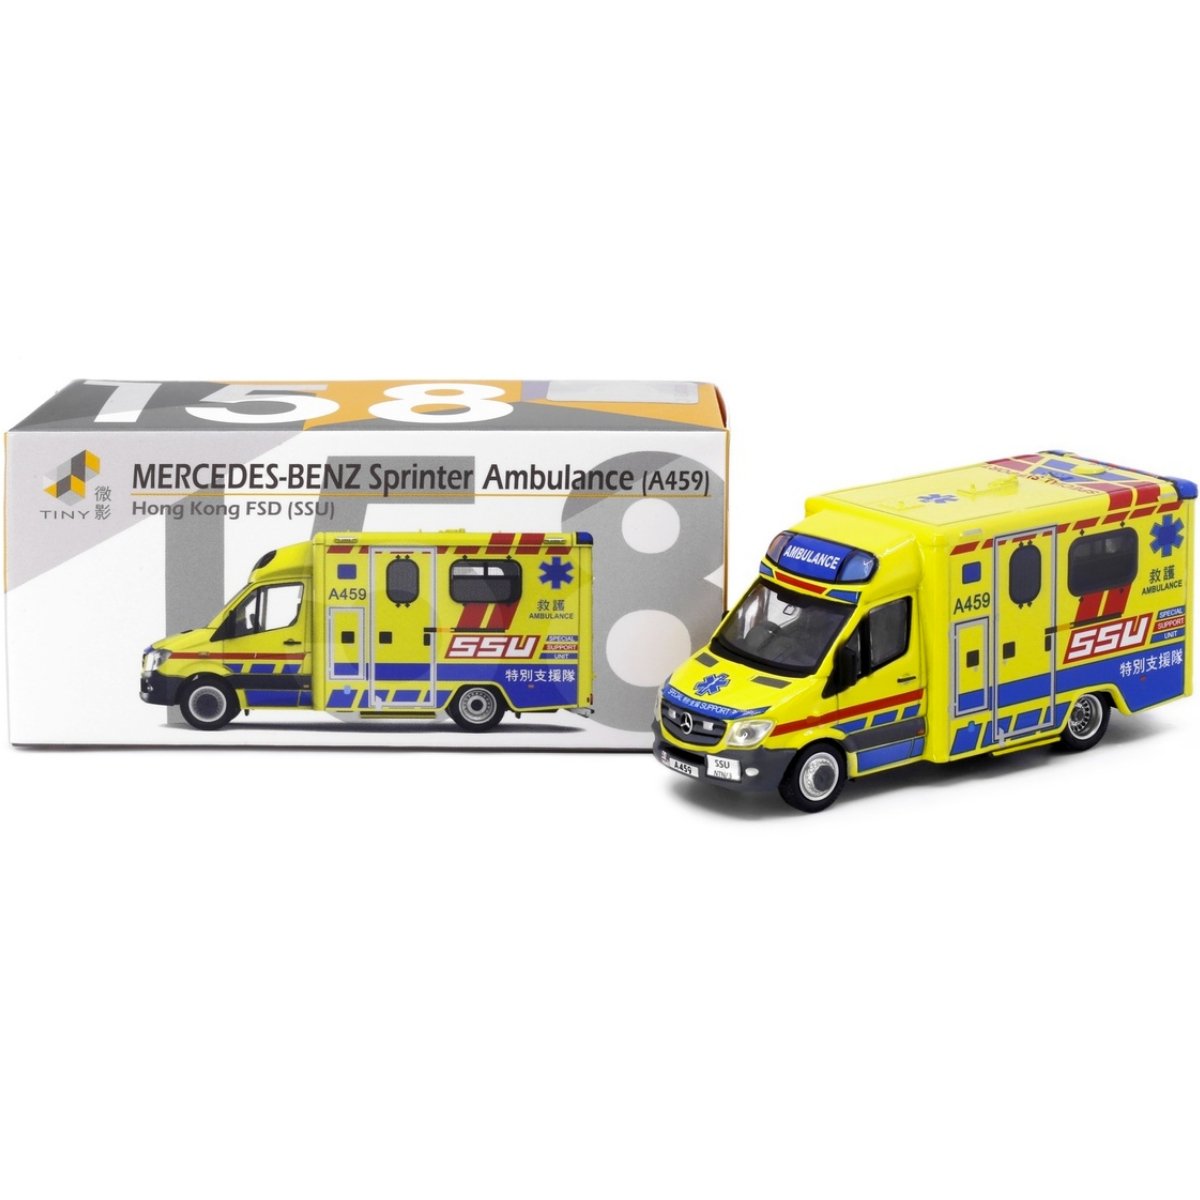 Tiny Models Mercedes-Benz Sprinter FL HKFSD Ambulance SSU (1:76 Scale) - Phillips Hobbies